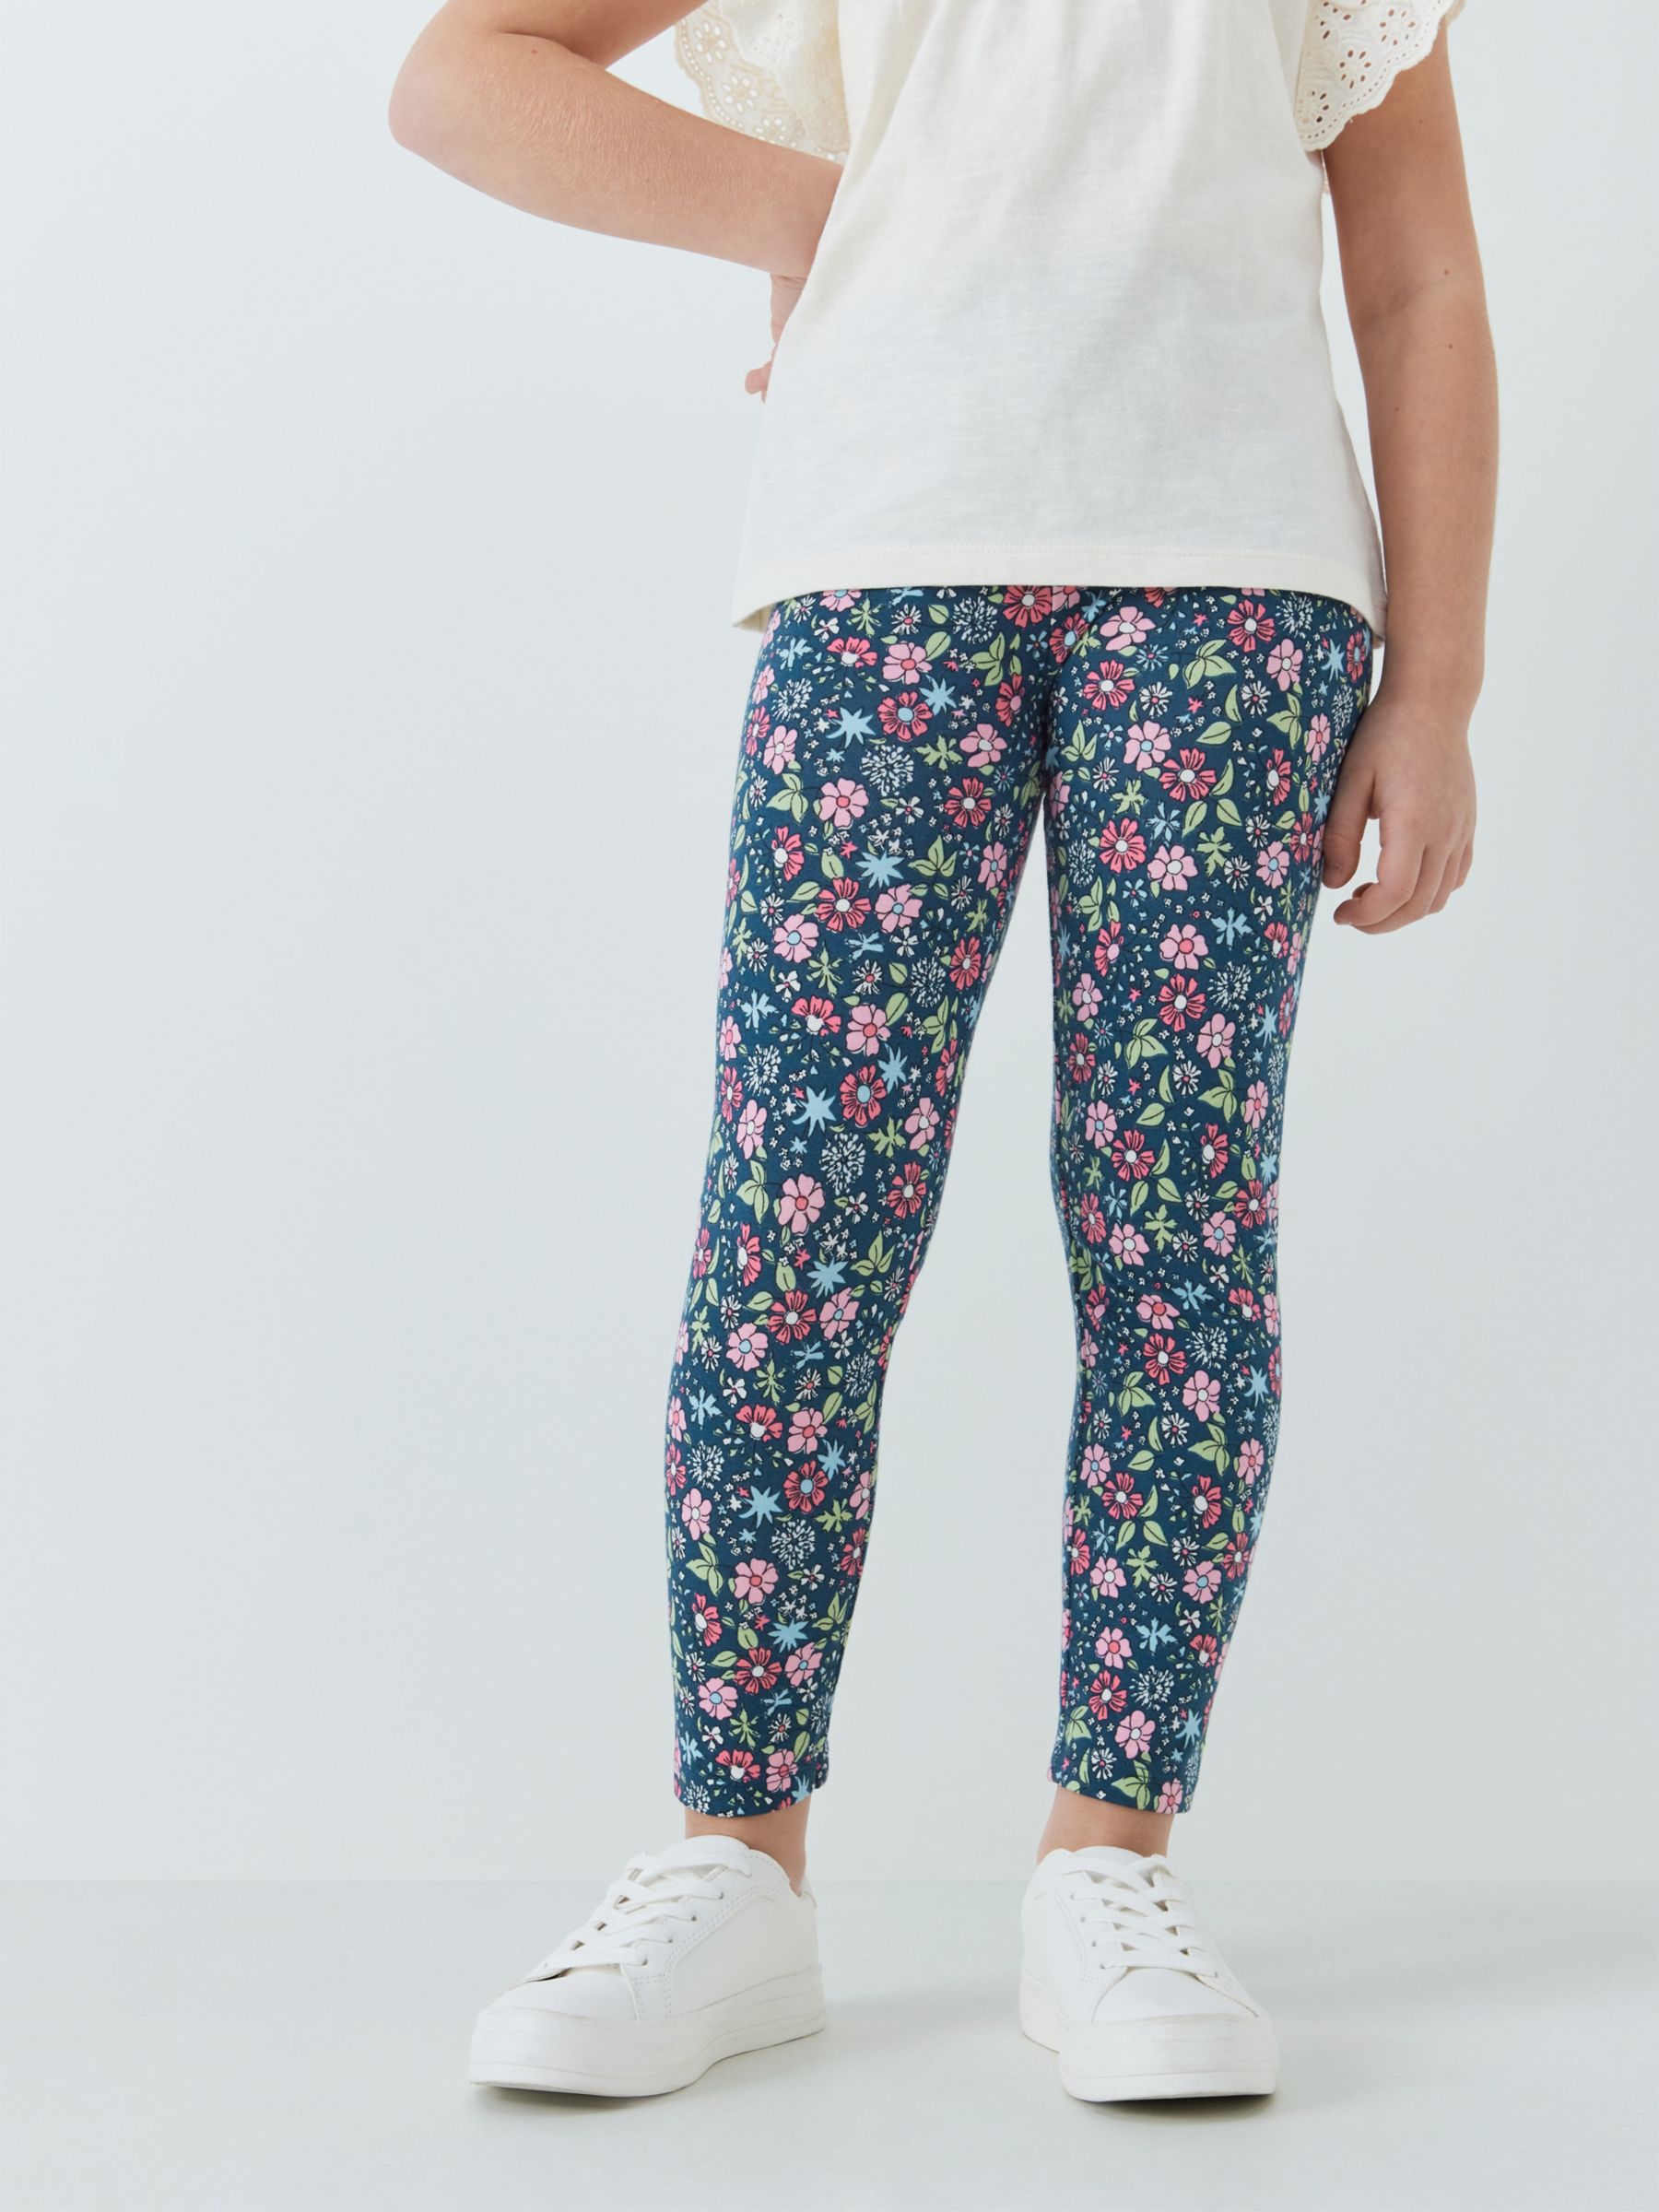 Buy Floral Print & Plain Leggings 3 Pack 1-1.5 years, Trousers